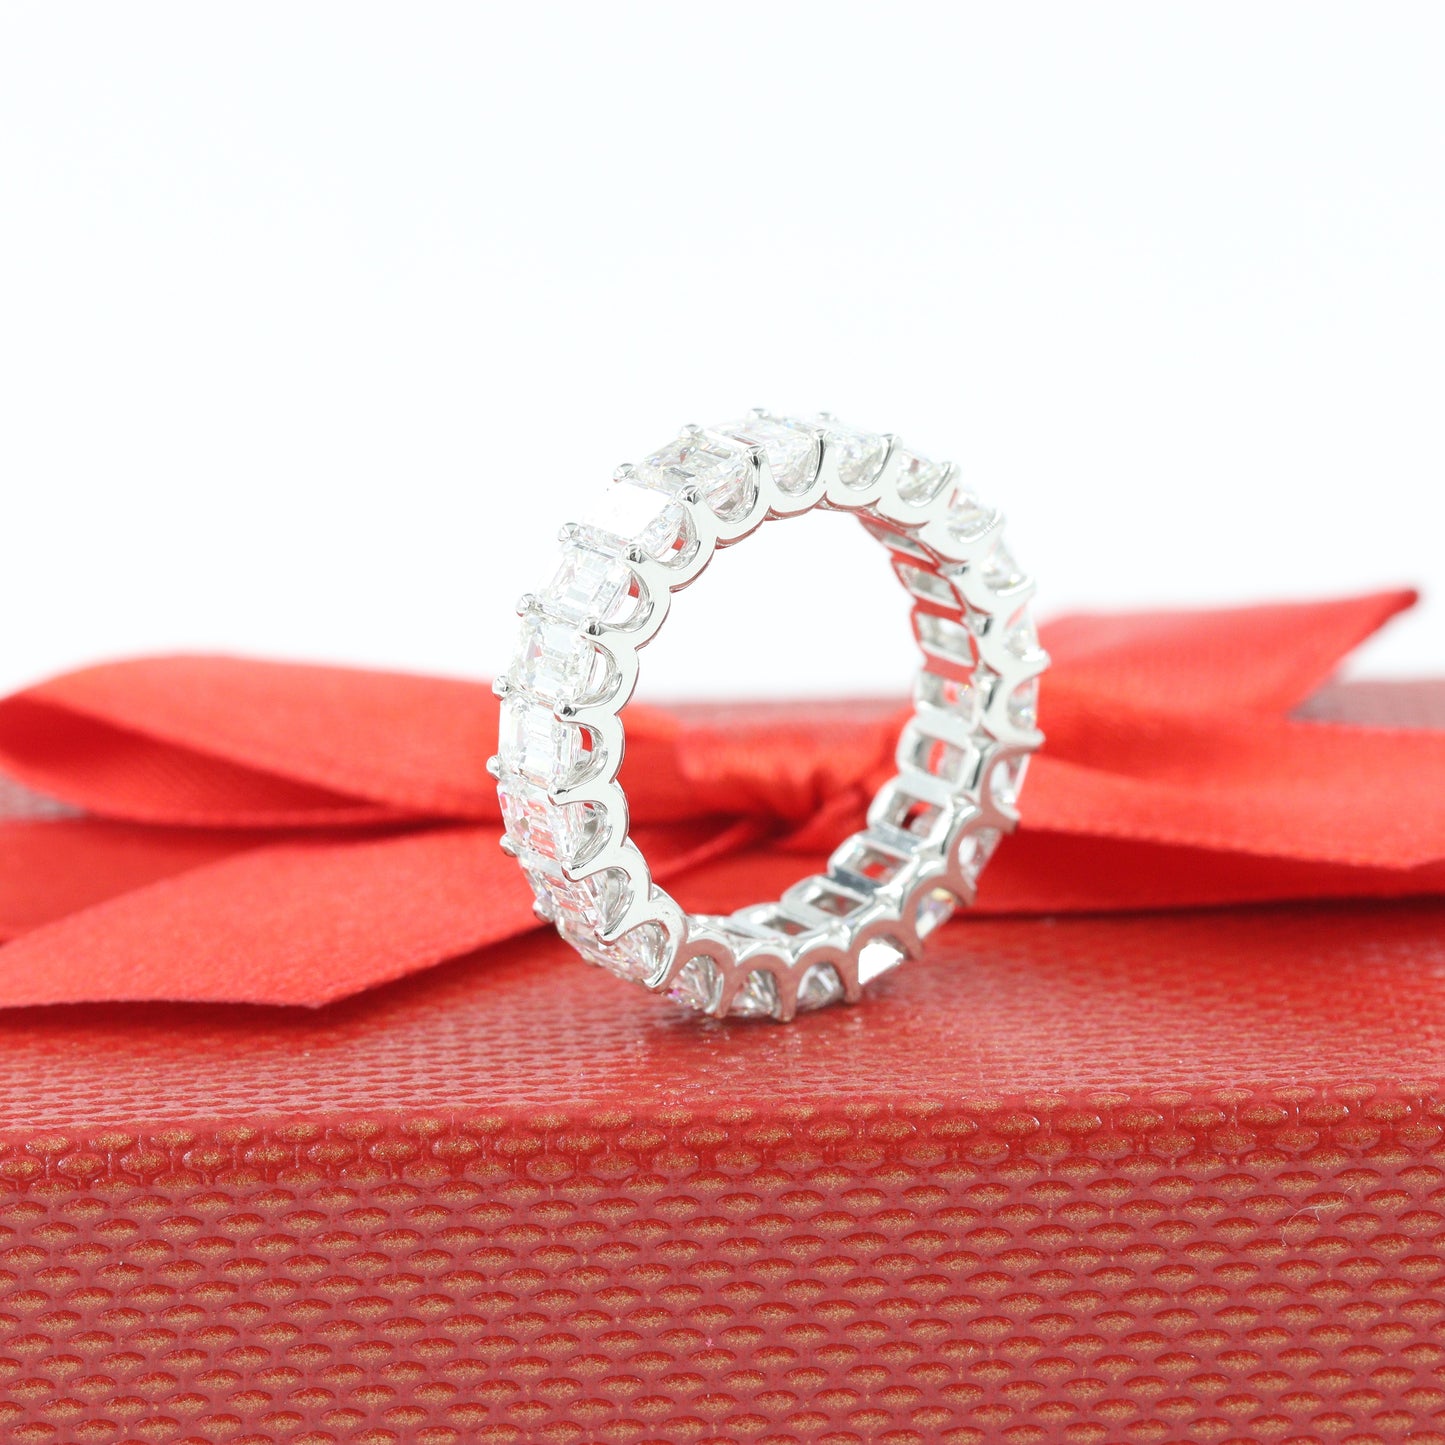 6ct Emerald Cut Diamond Platinum Ring/Stackable Emerald Cut Diamond U Shape Wedding Band/Full Eternity Wedding Ring/Anniversary gift